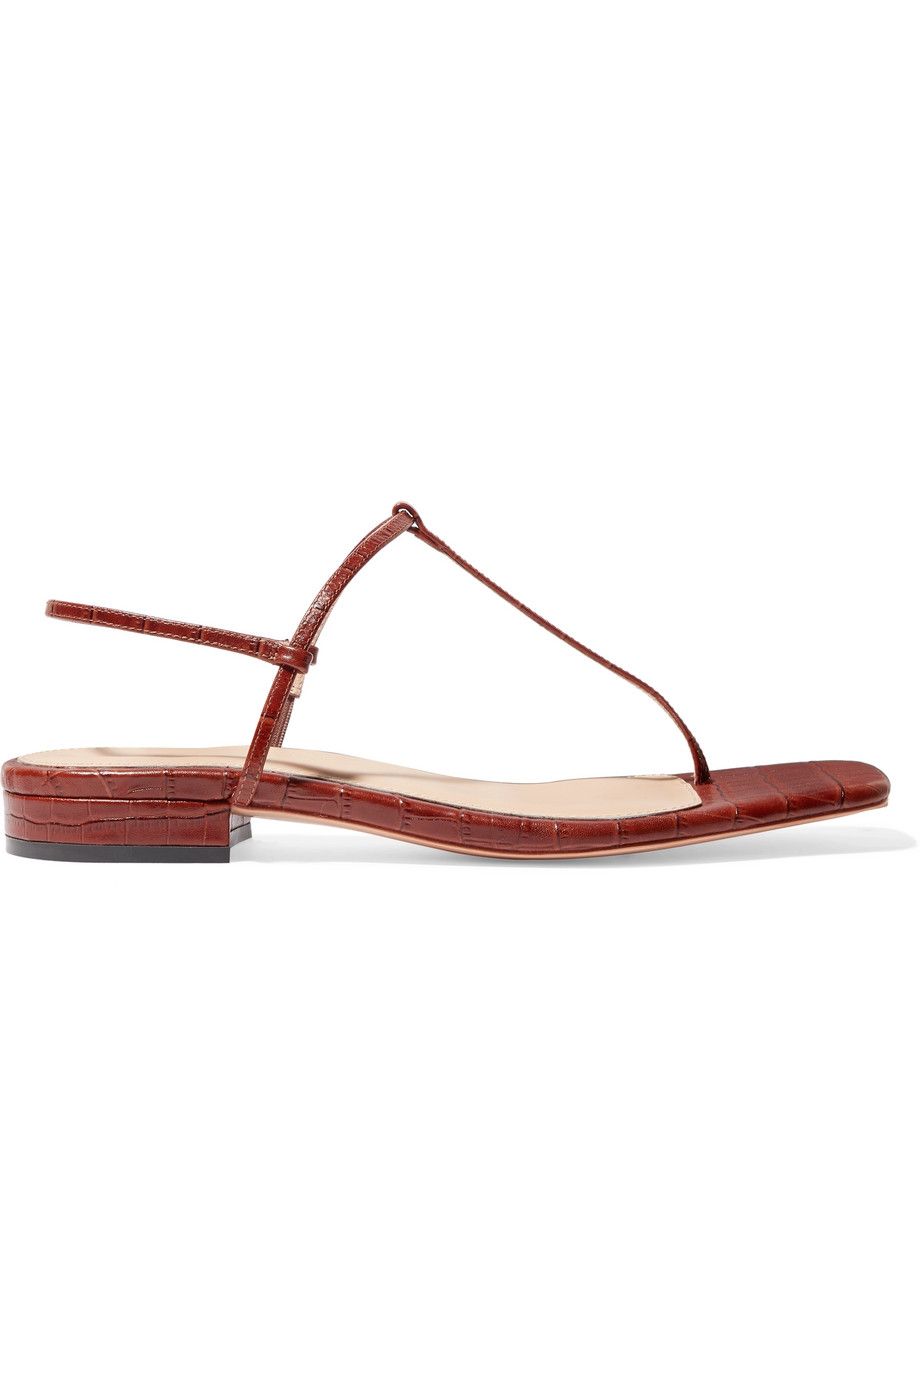 04 croc-effect leather sandals